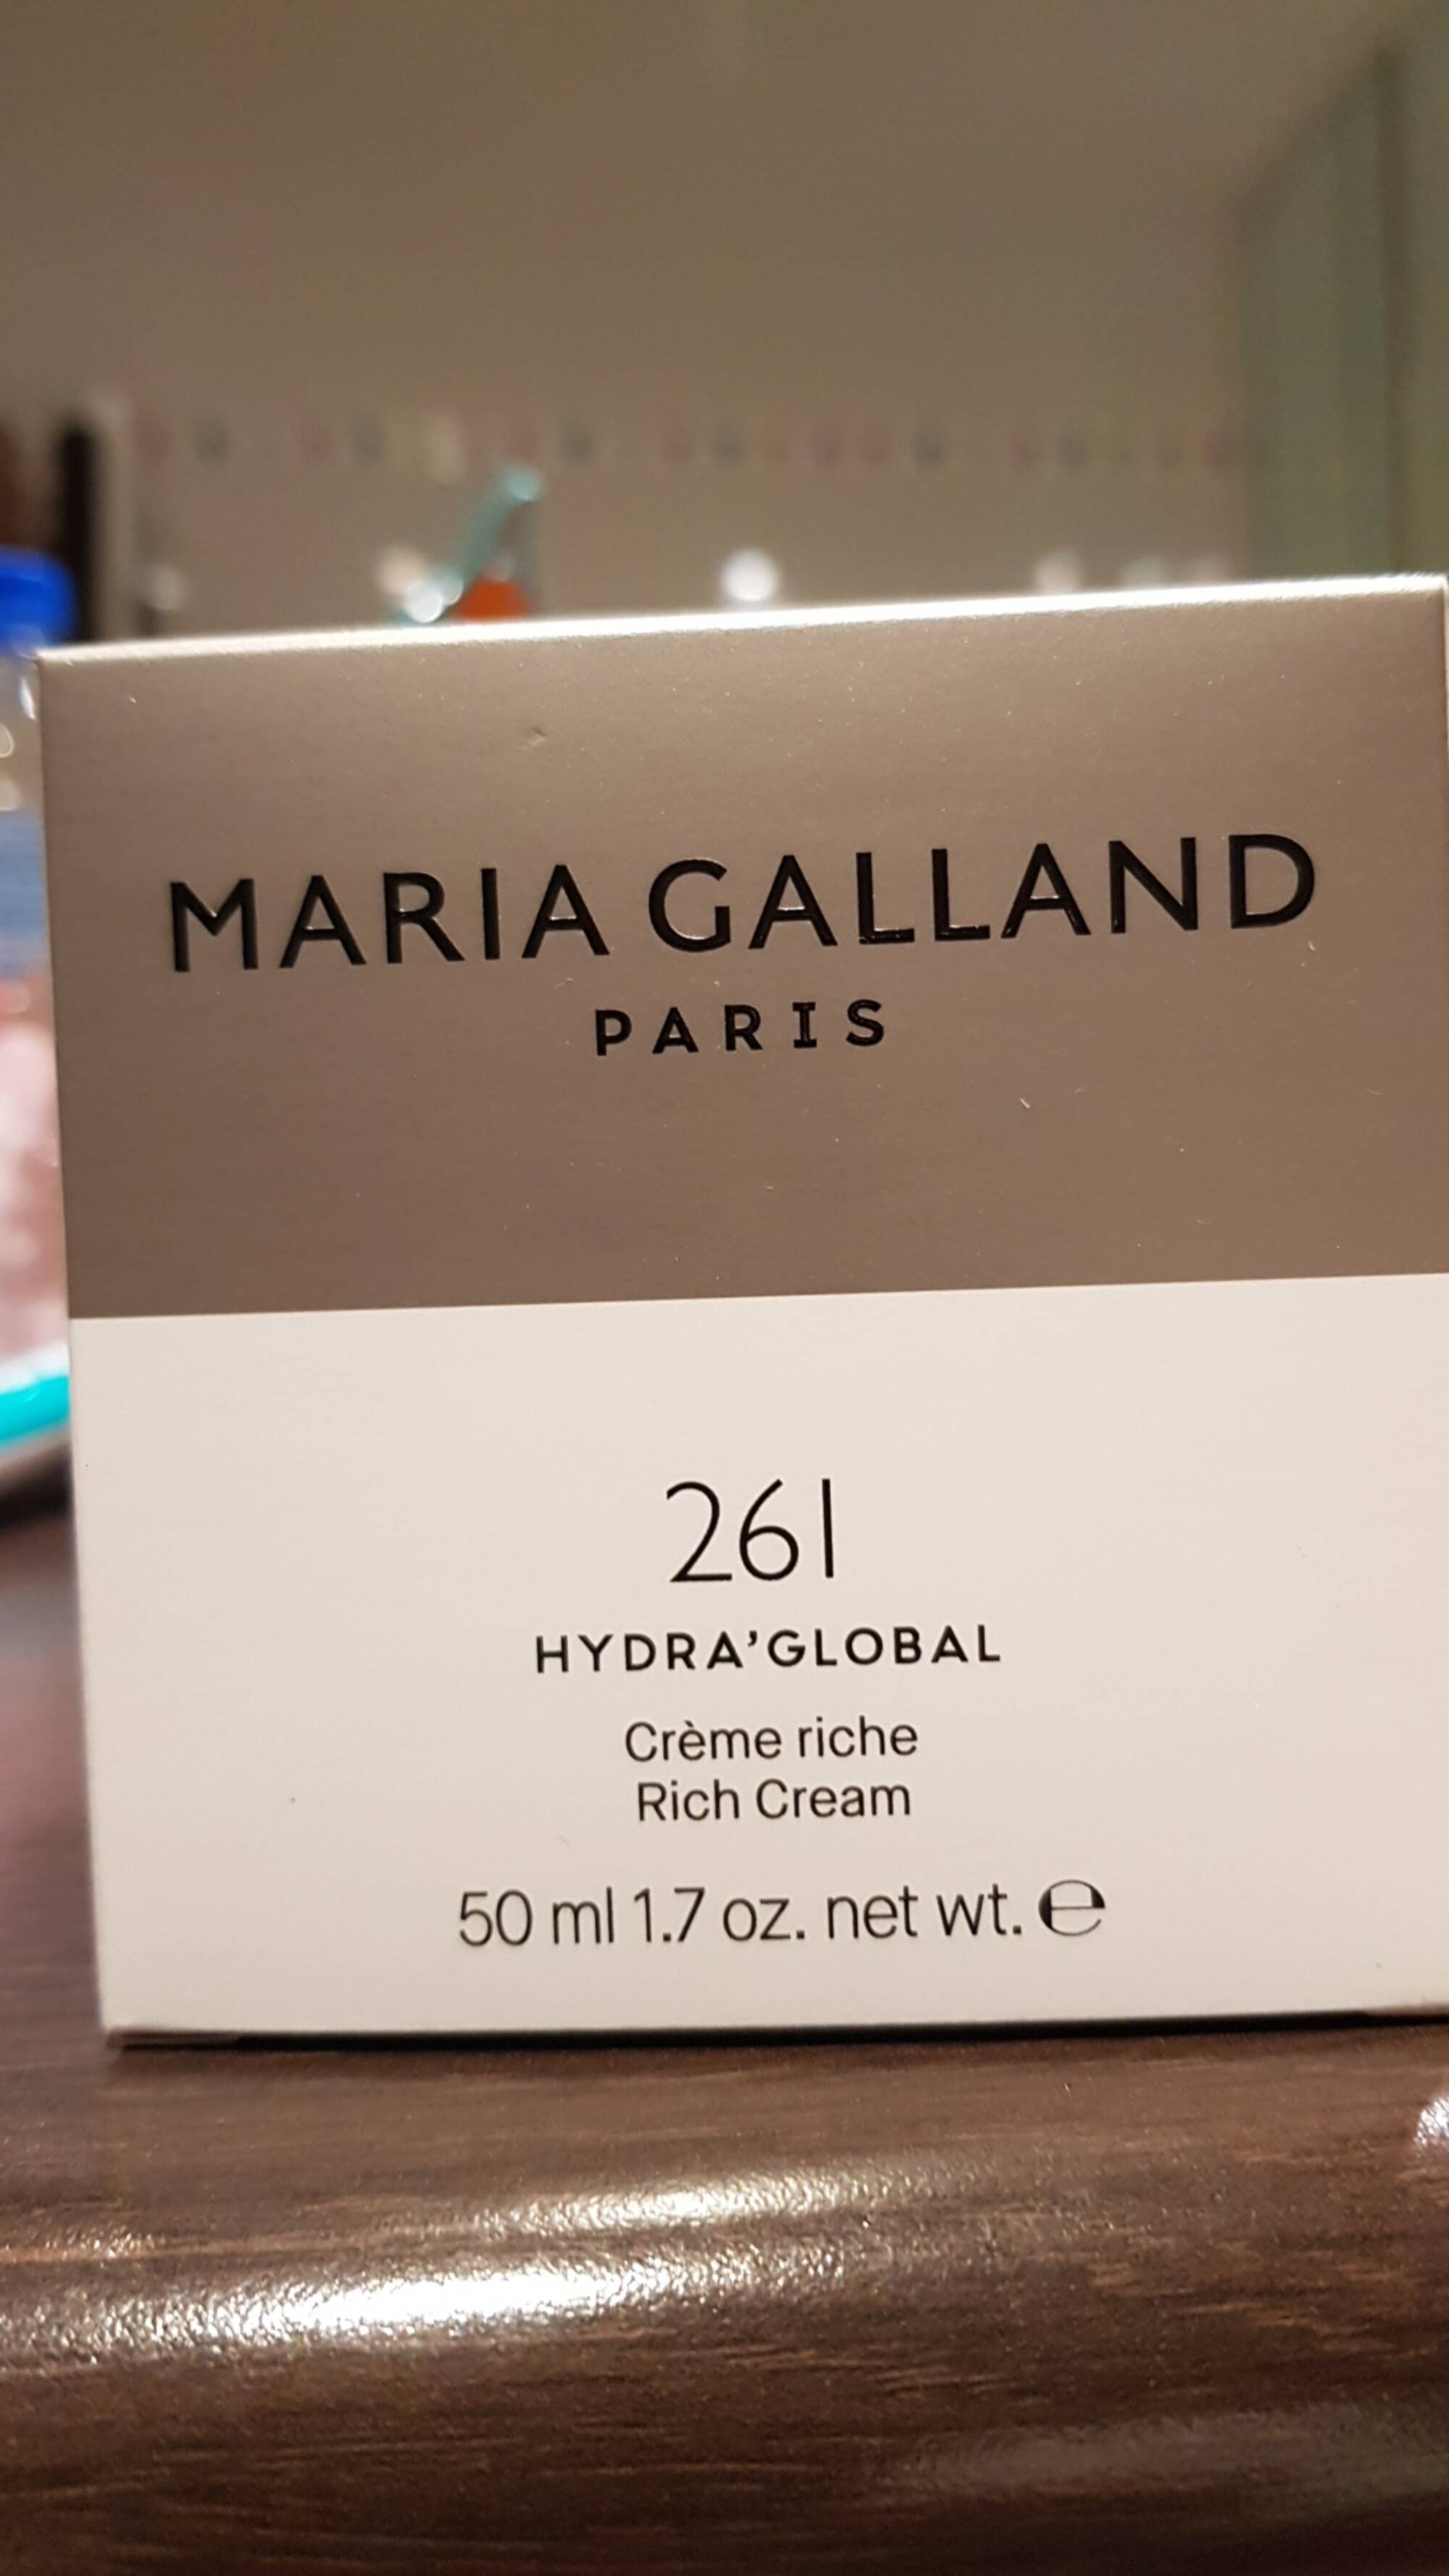 MARIA GALLAND - 261 Hydra'global - Crème riche